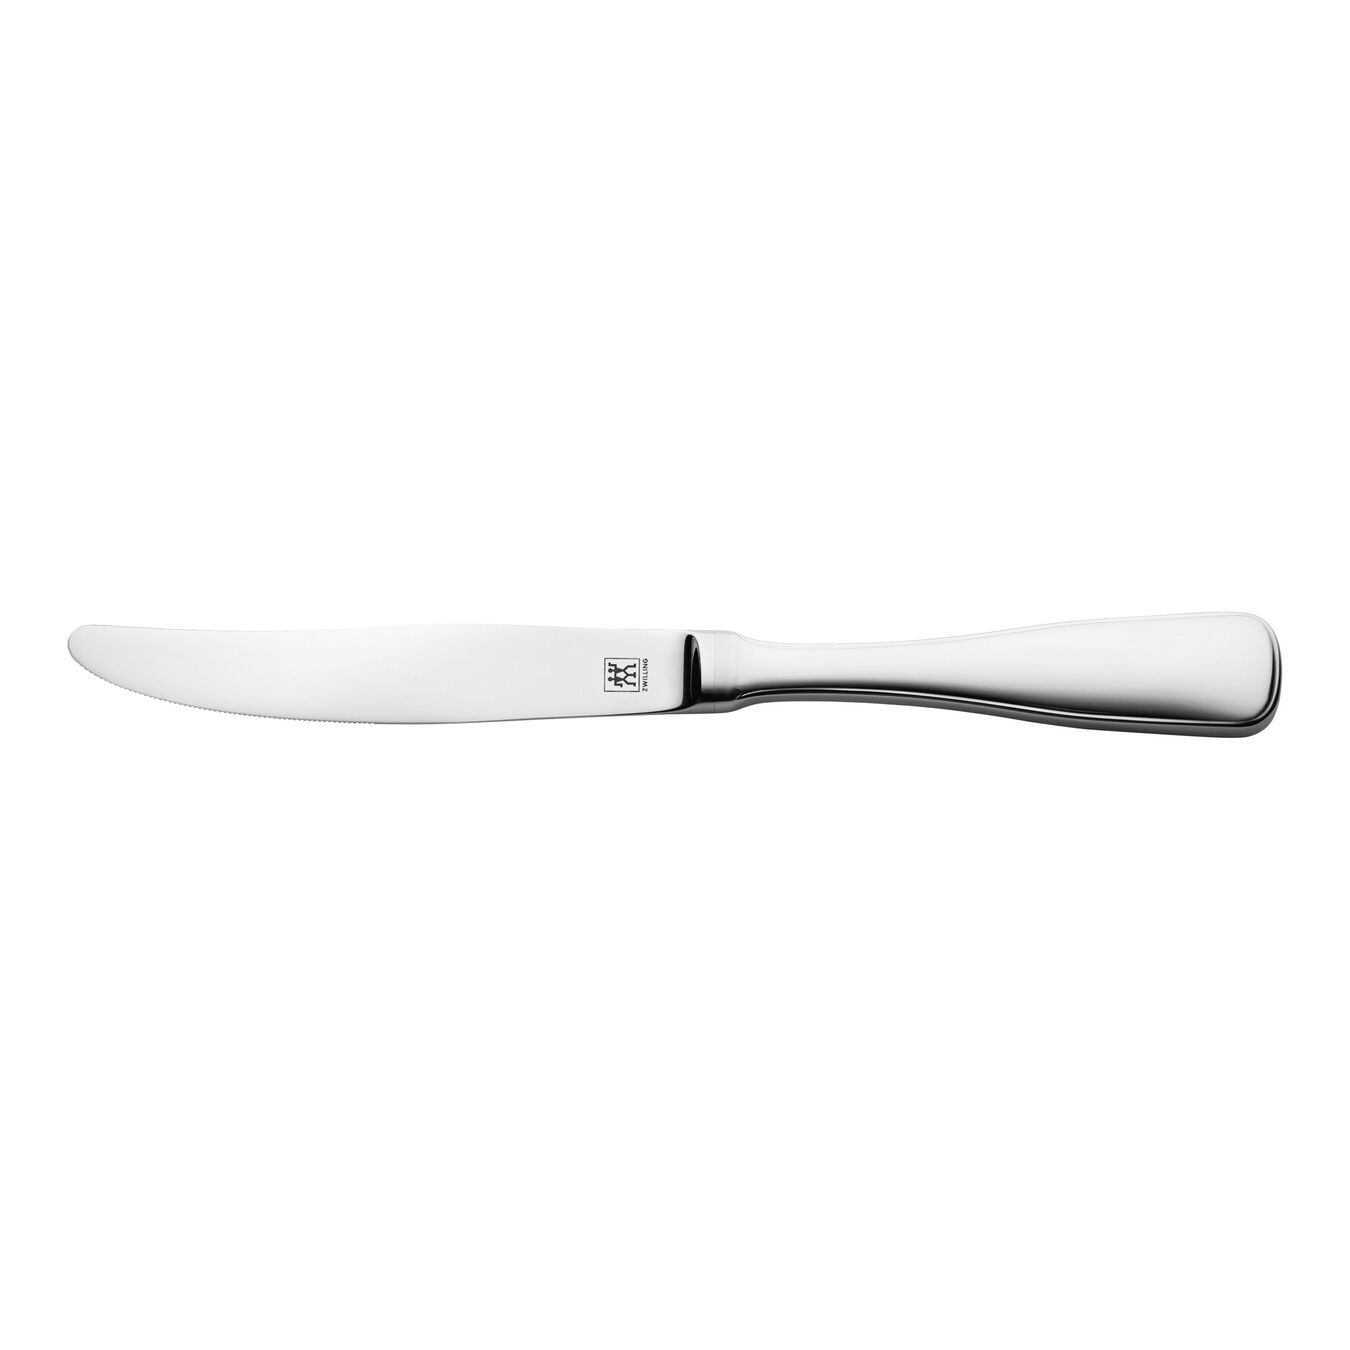 Bordskniv Polerad,,large 1